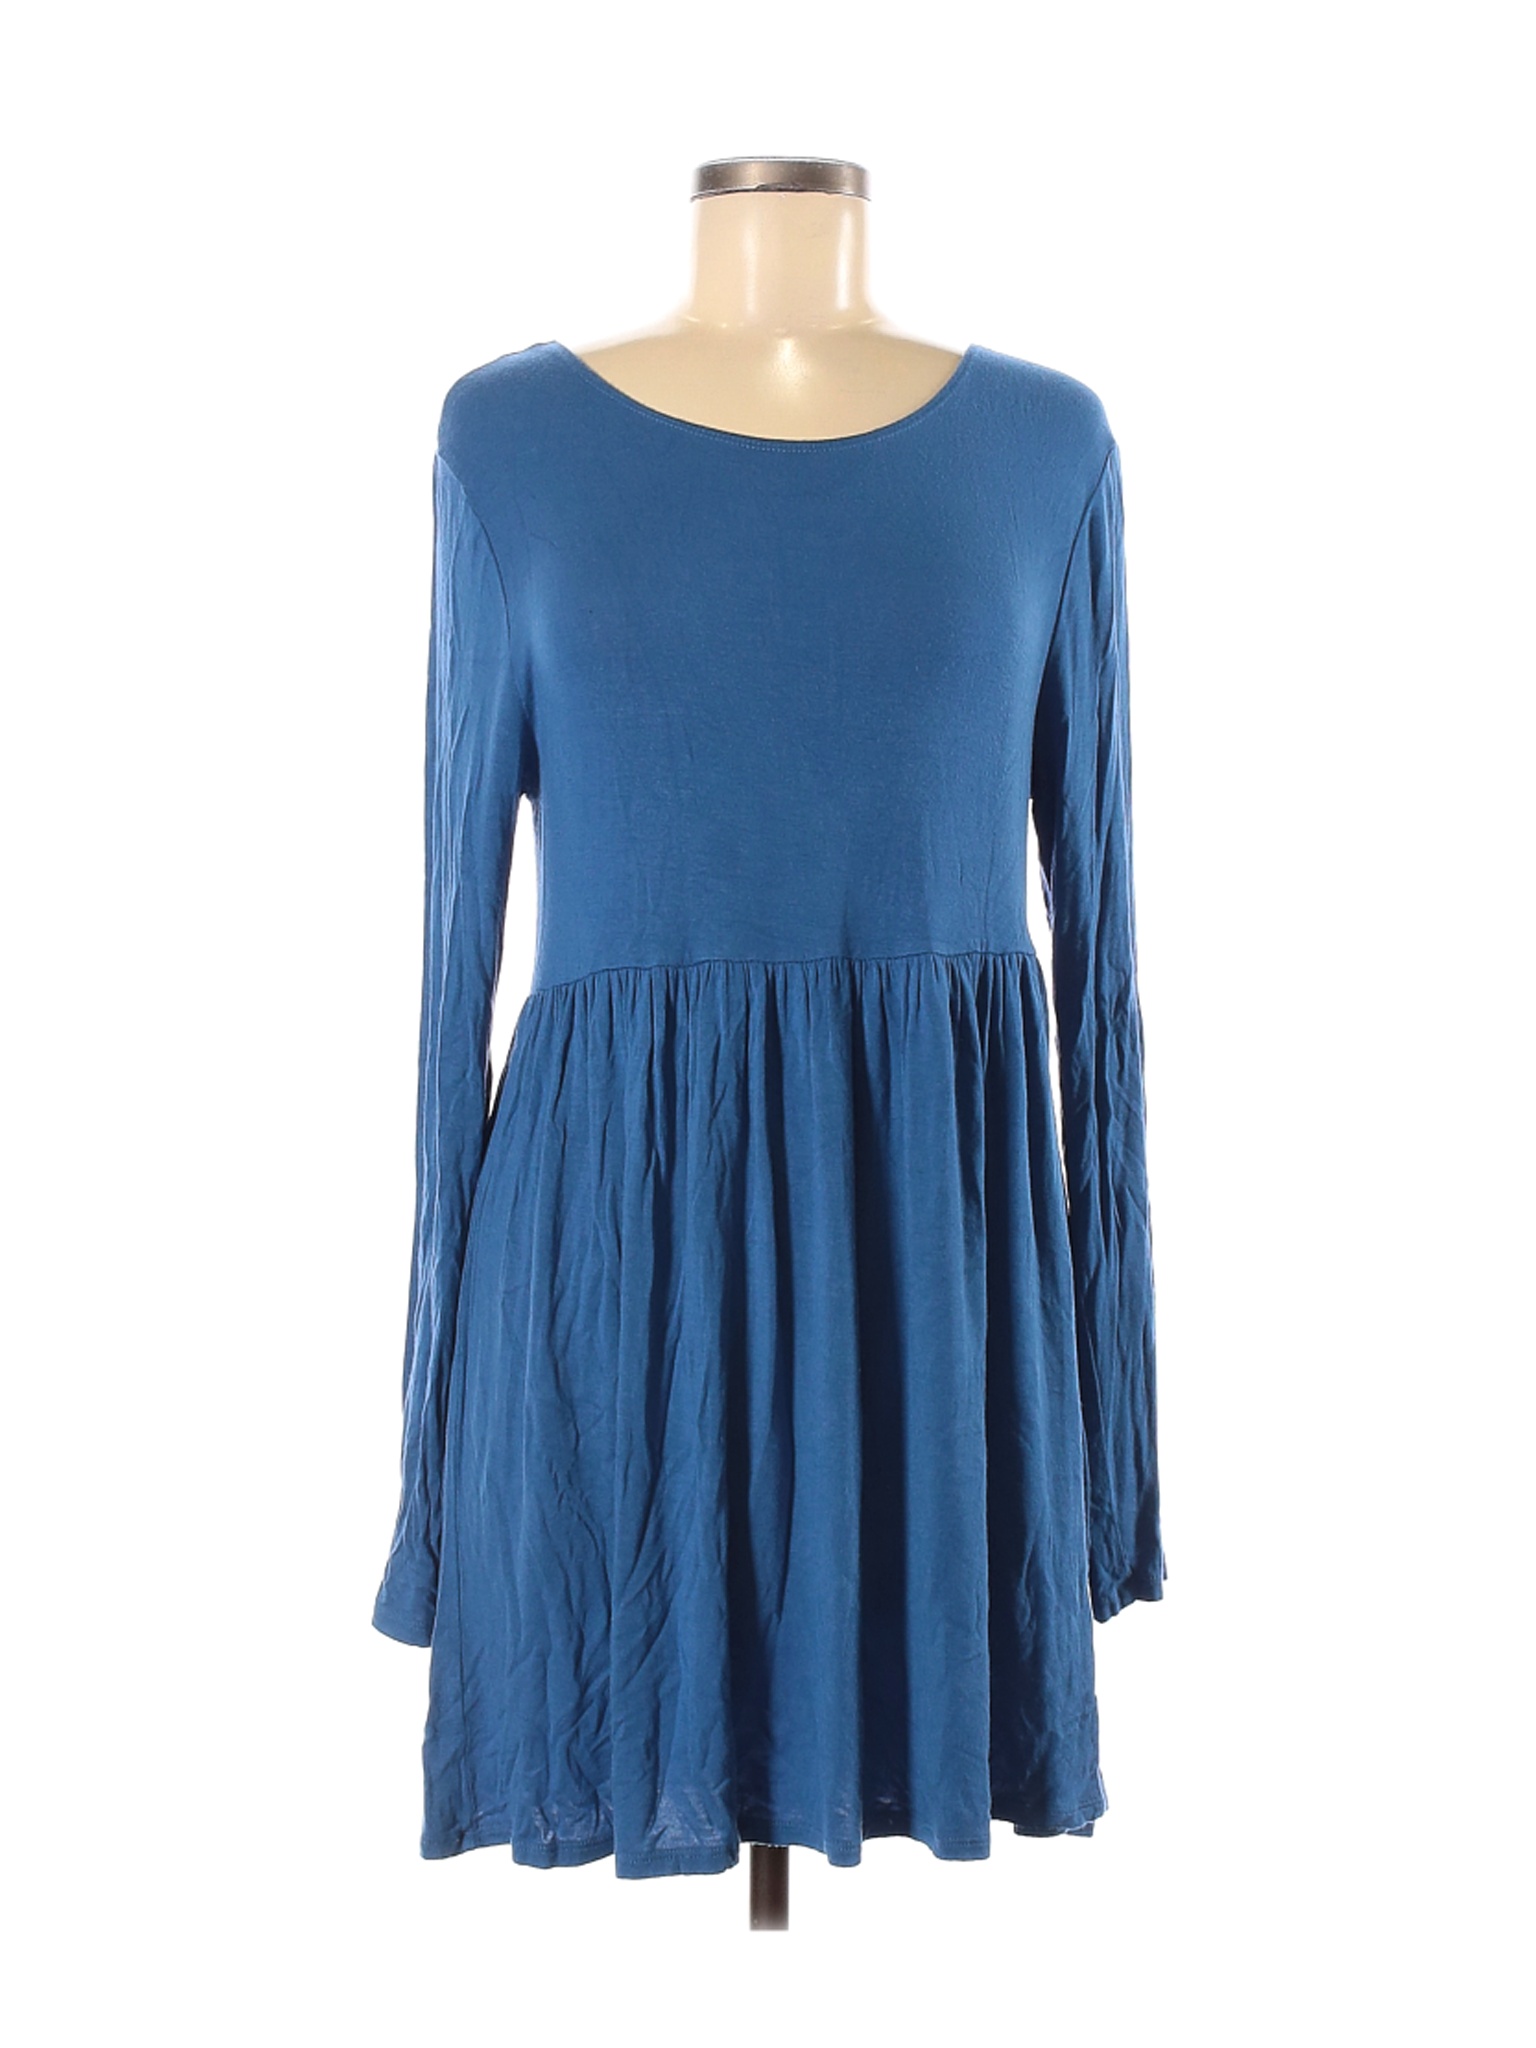 Zenana Outfitters Women Blue Casual Dress M | eBay